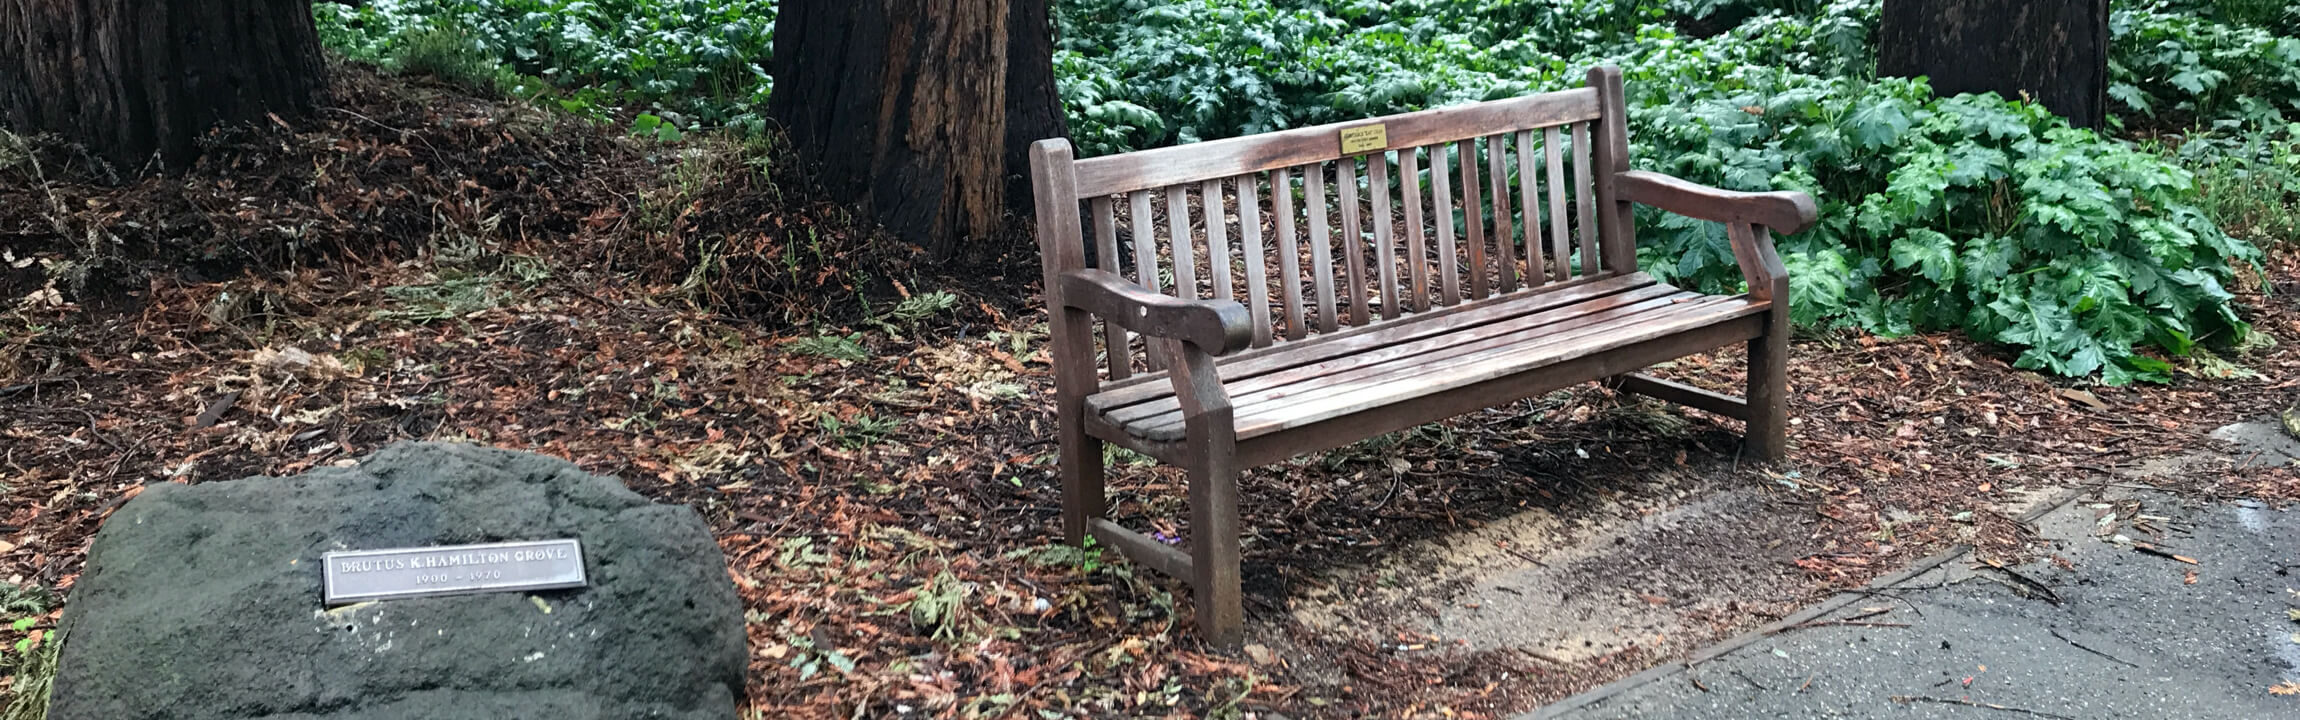 A bench at the Brutus Hamilton Grove at UC Berkeley